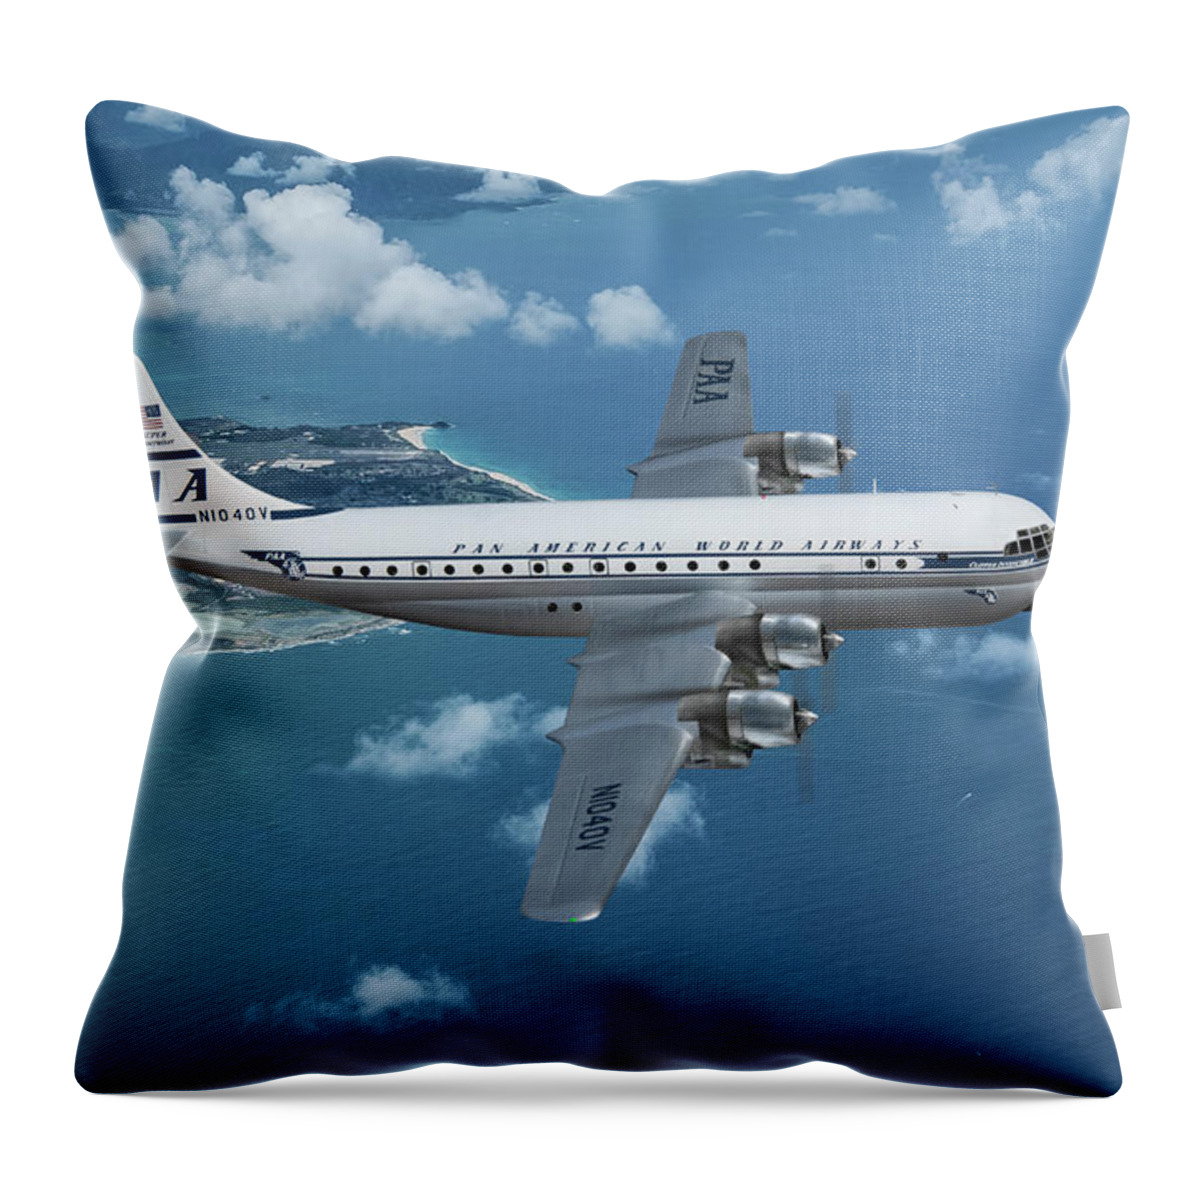 Pan American World Airways Throw Pillow featuring the digital art Pan American Super Stratocruiser by Erik Simonsen